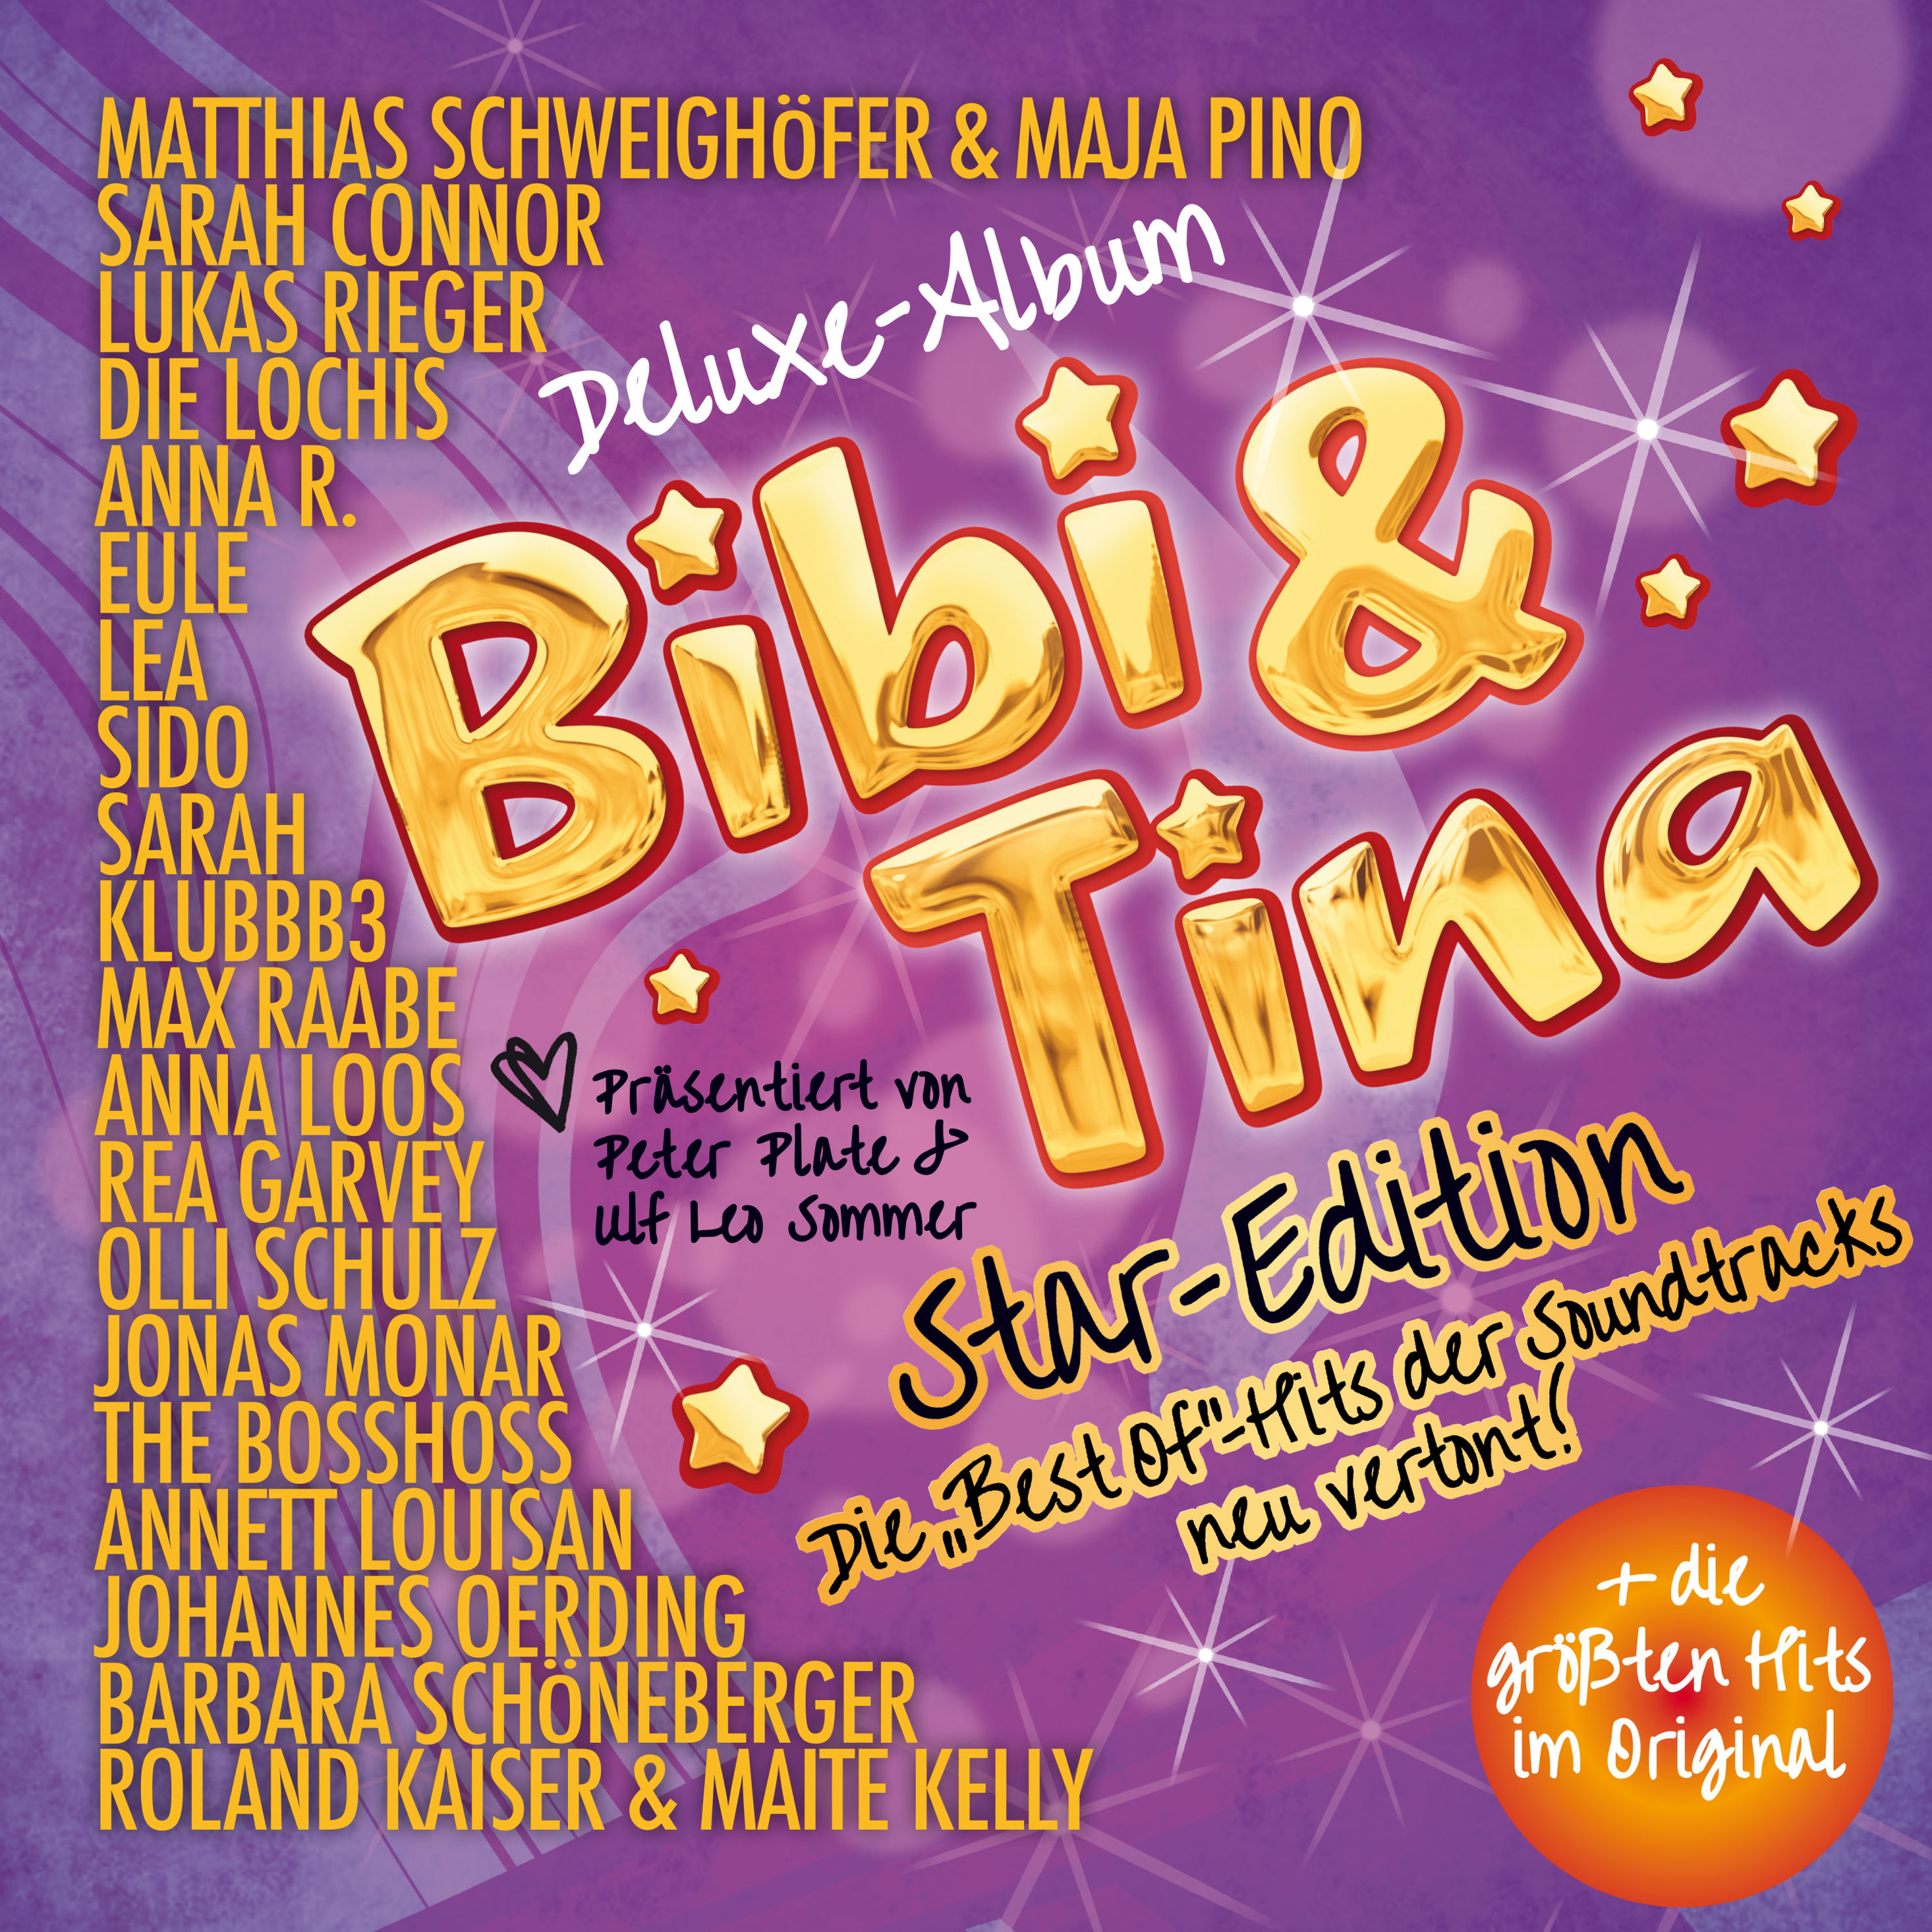 Bibi & Tina - Bibi & Tina - Star-Edition: Die Best of -Hits der Soundracks  neu vertont! Deluxe-Album Hörbuch Download